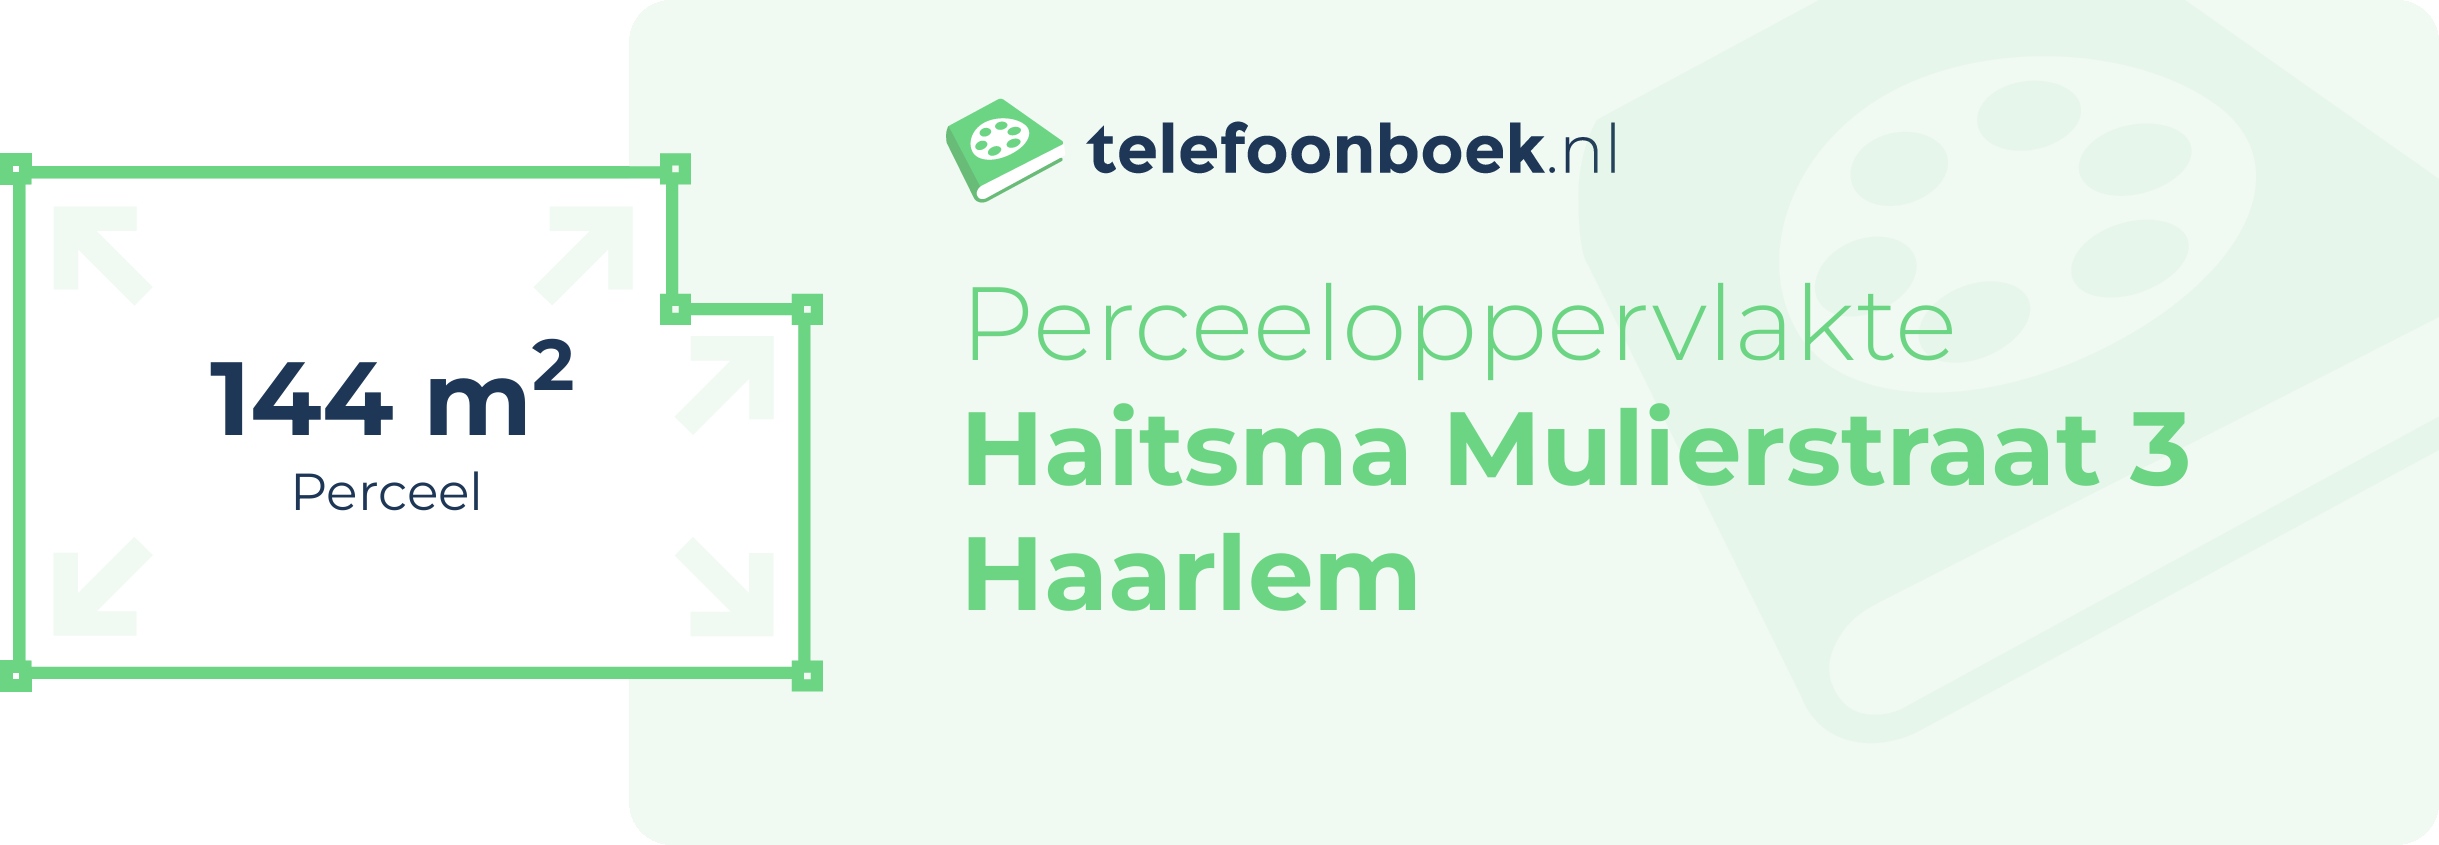 Perceeloppervlakte Haitsma Mulierstraat 3 Haarlem